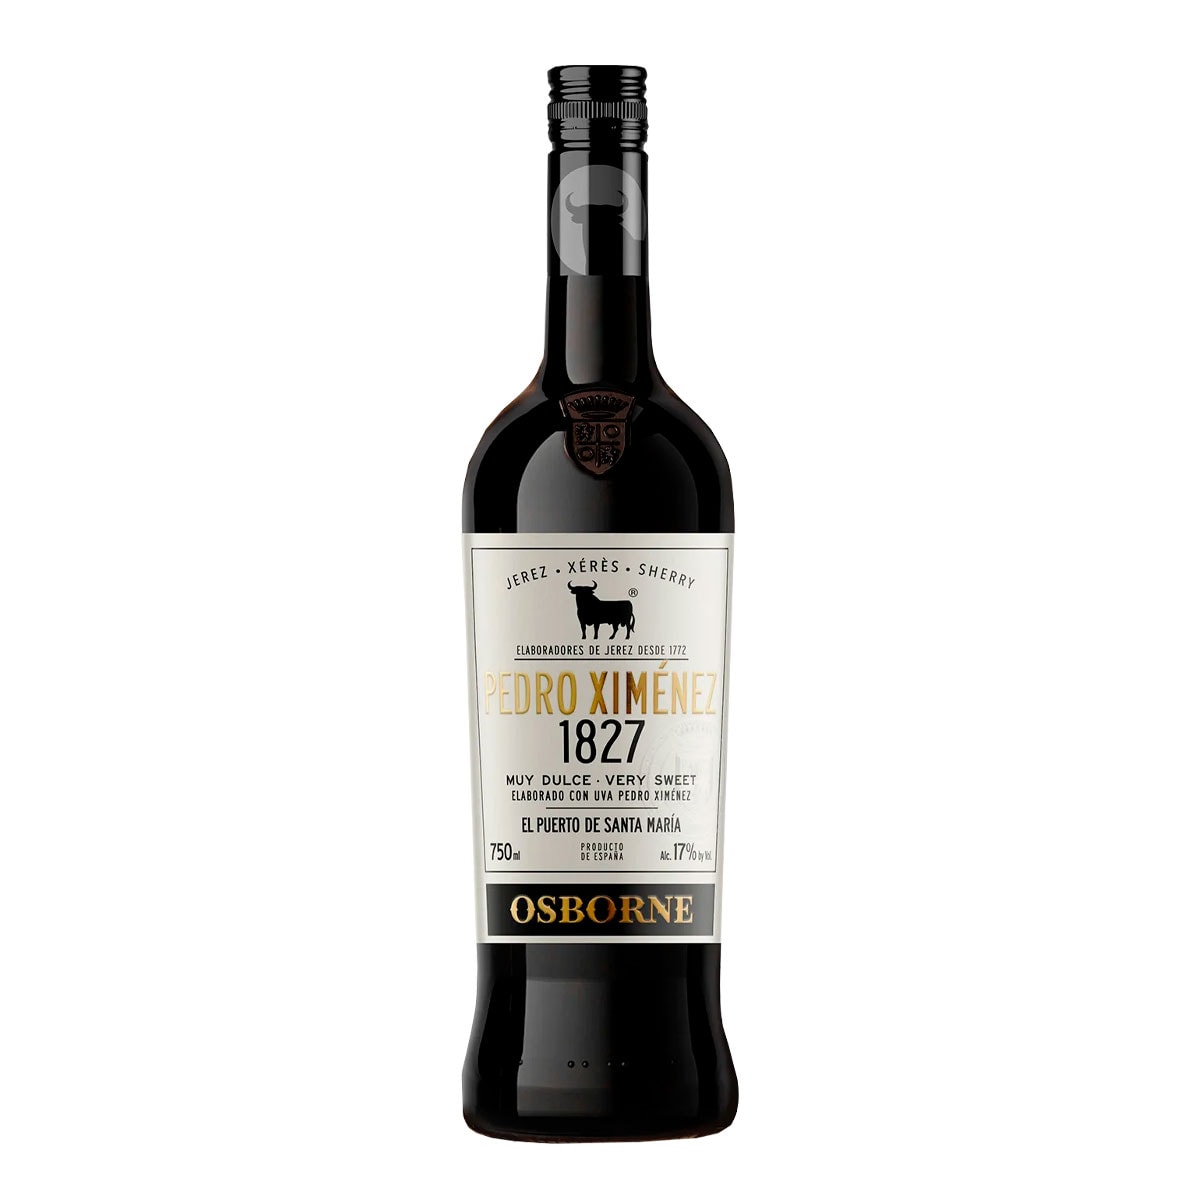 Osborne pedro ximénez 1827 jerez/sherry very sweet 75cl